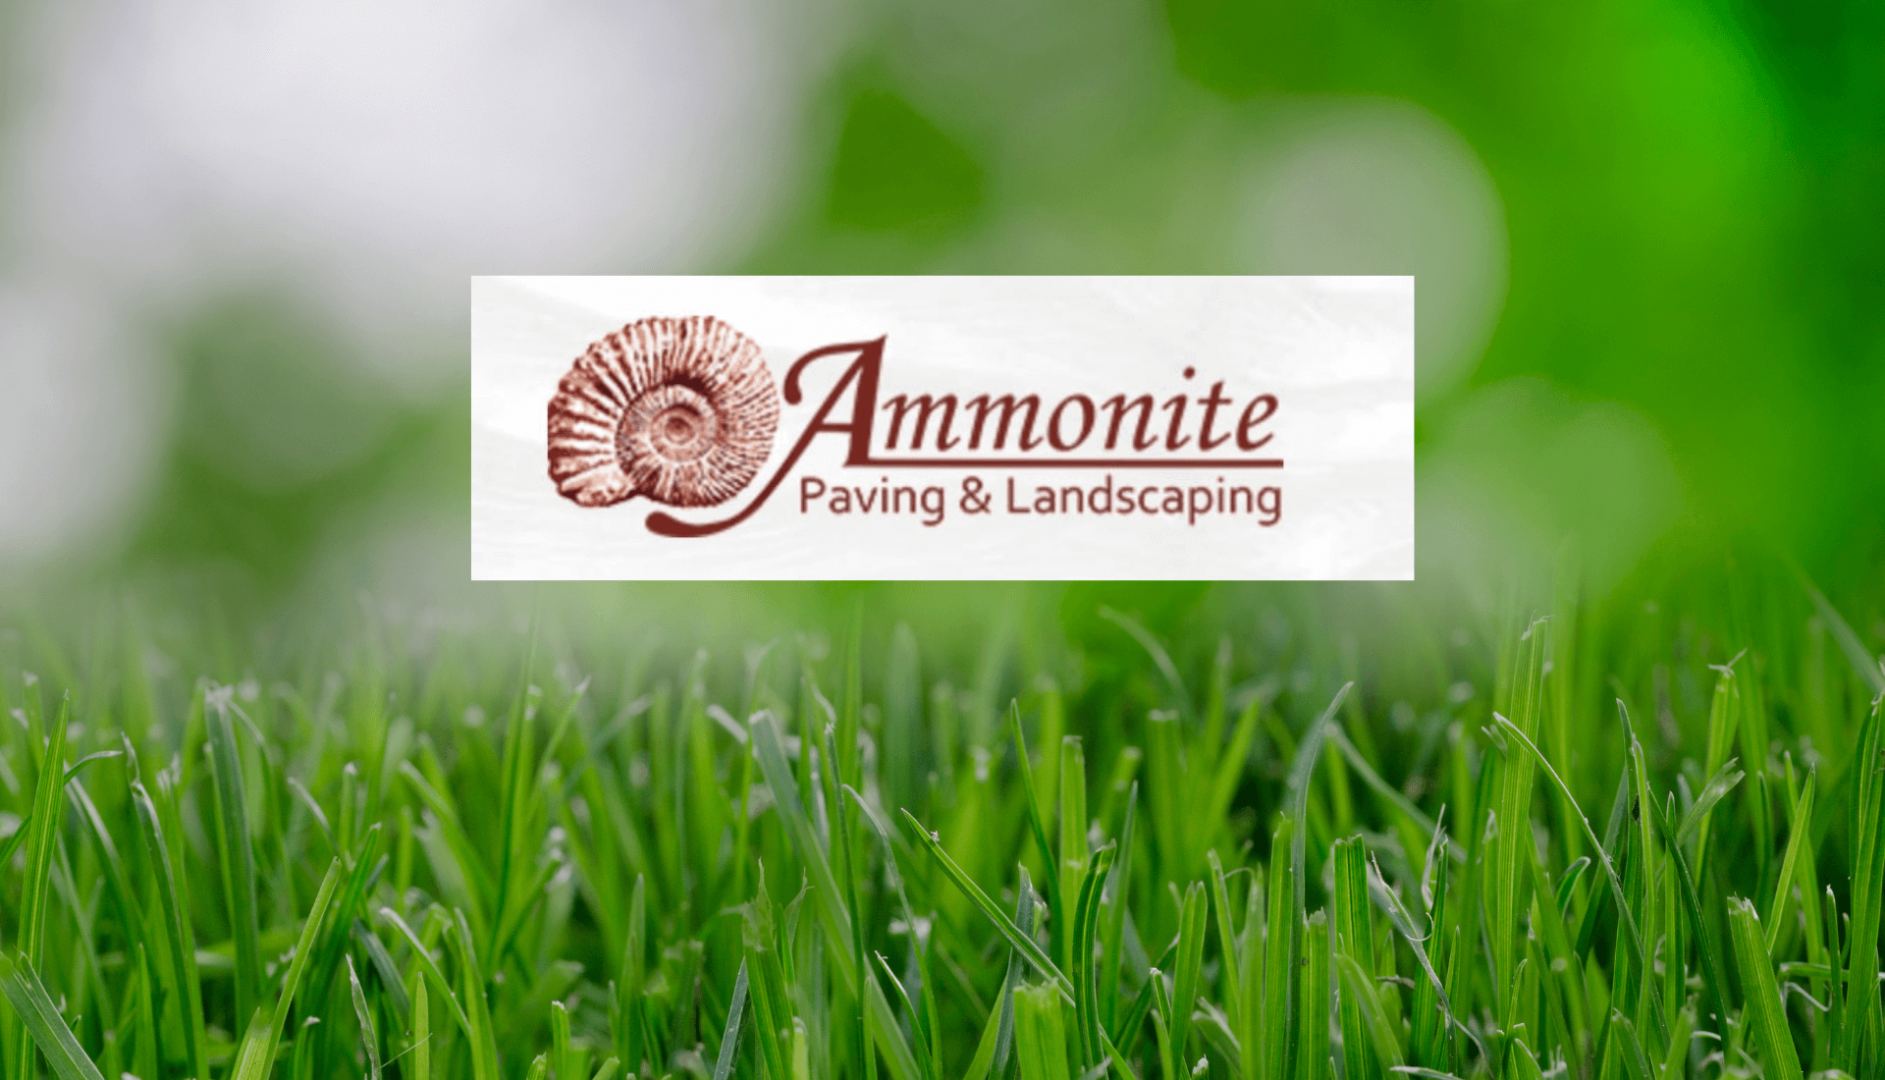 Ammonite Landscaping & Paving in Gloucester